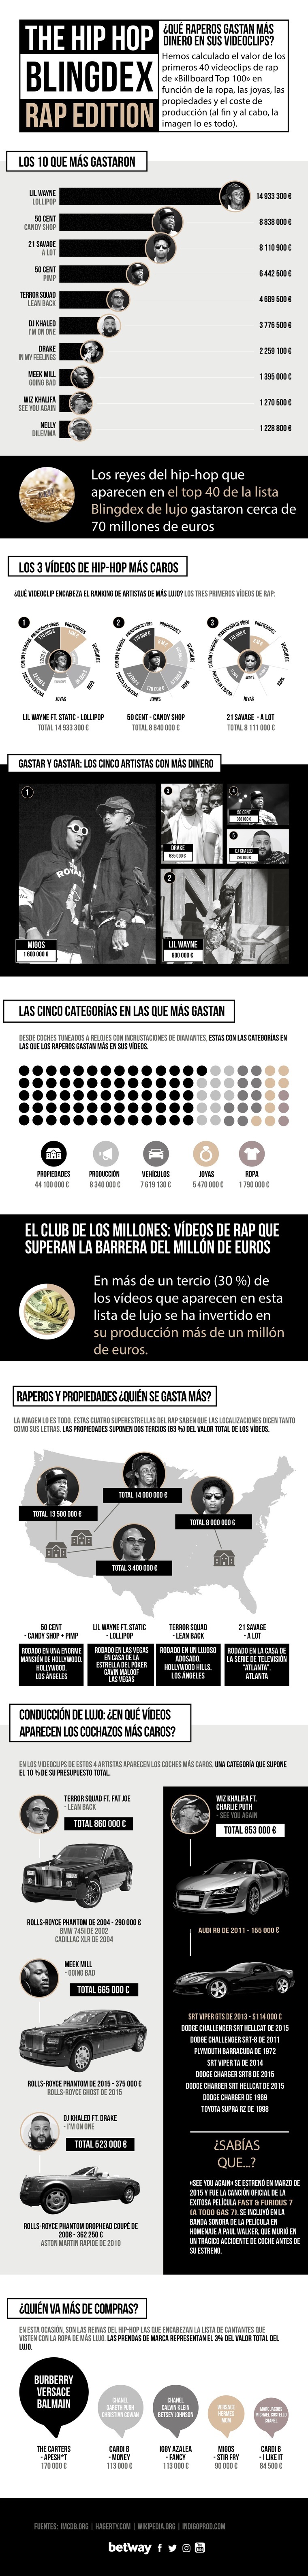 rap edition infografía